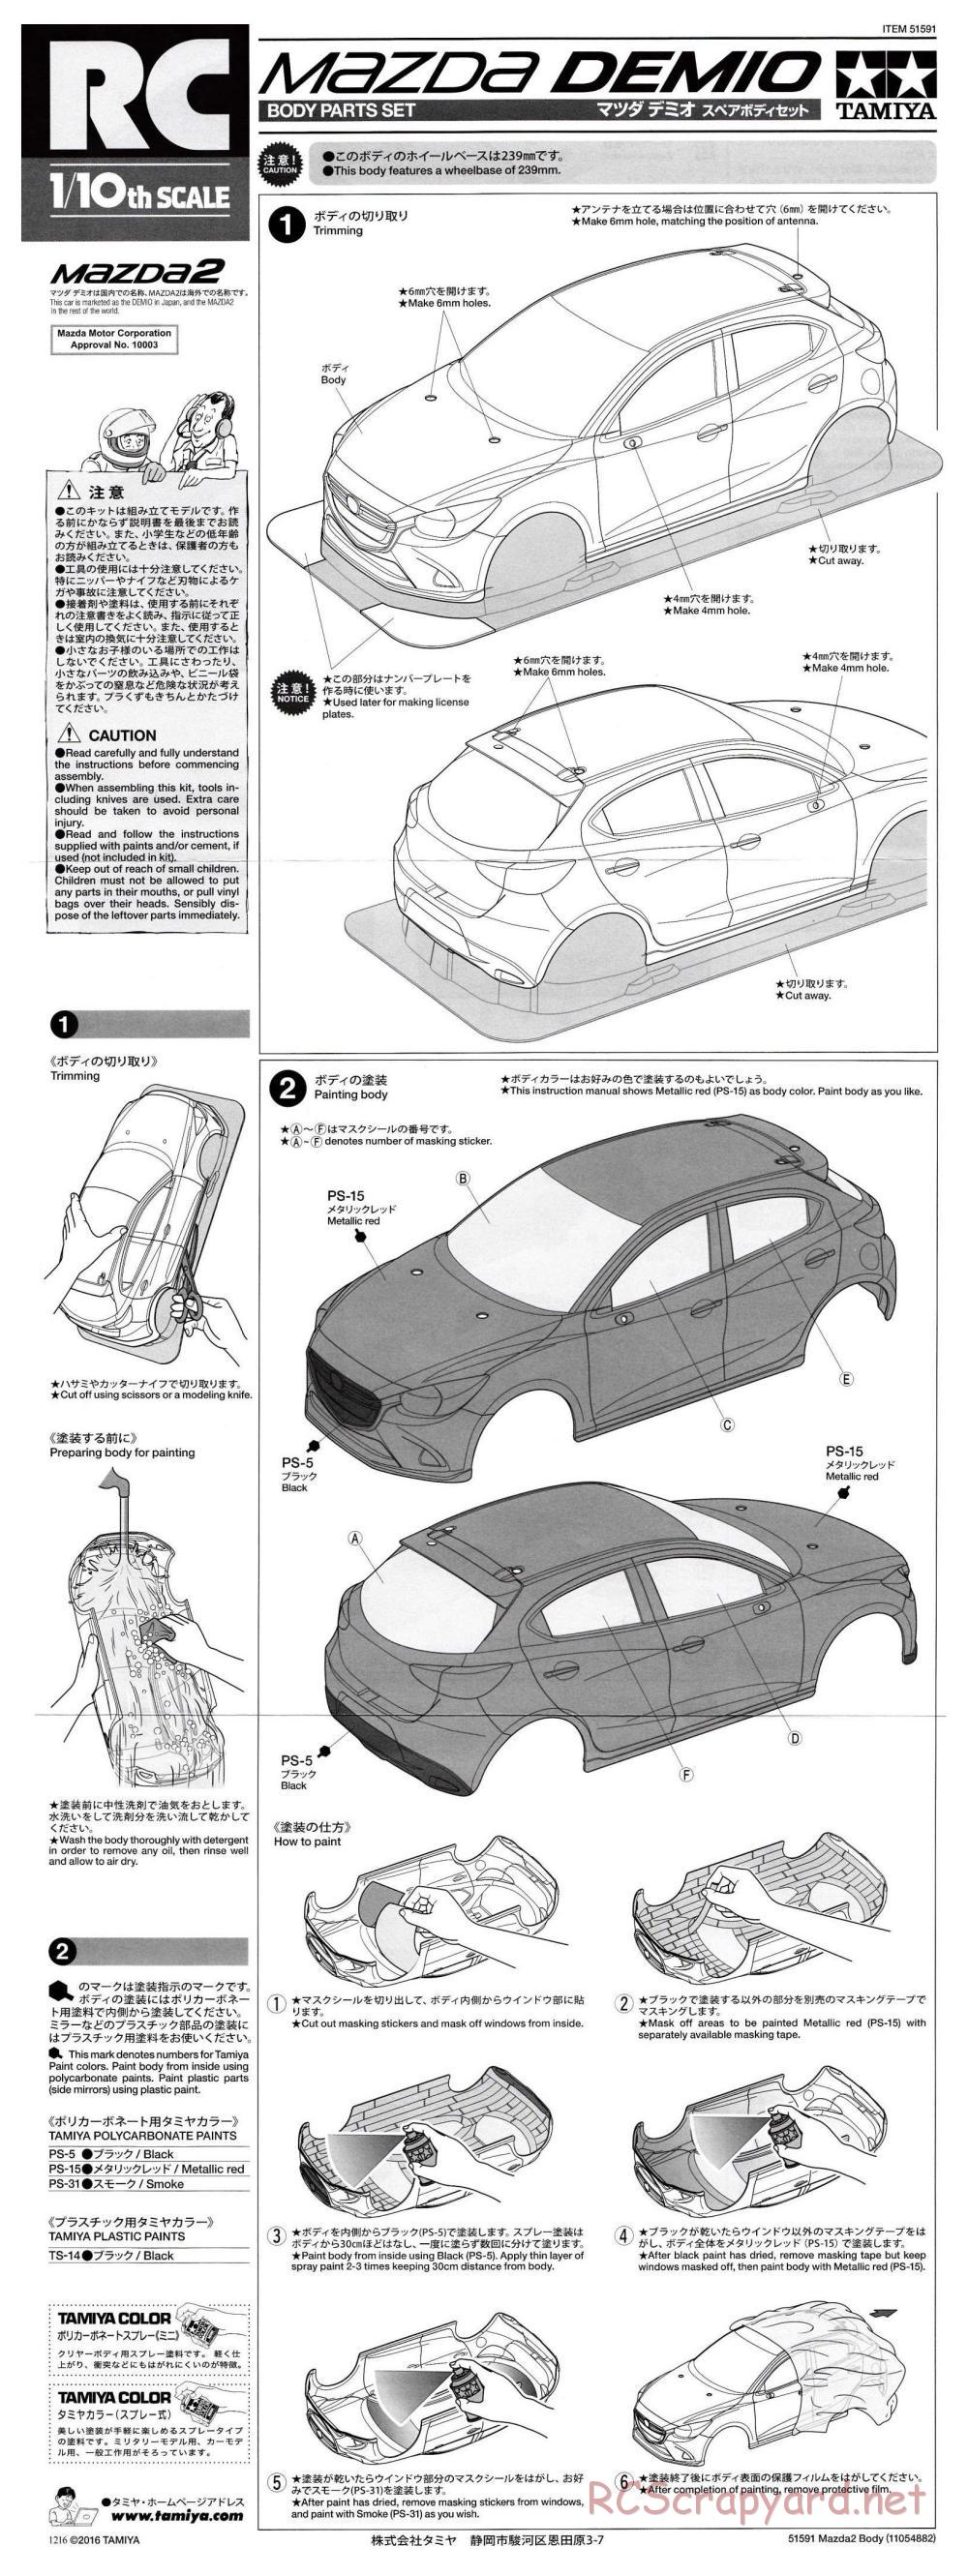 Tamiya - Mazda2 / Mazda Demio - M-05 Chassis - Body Manual - Page 1